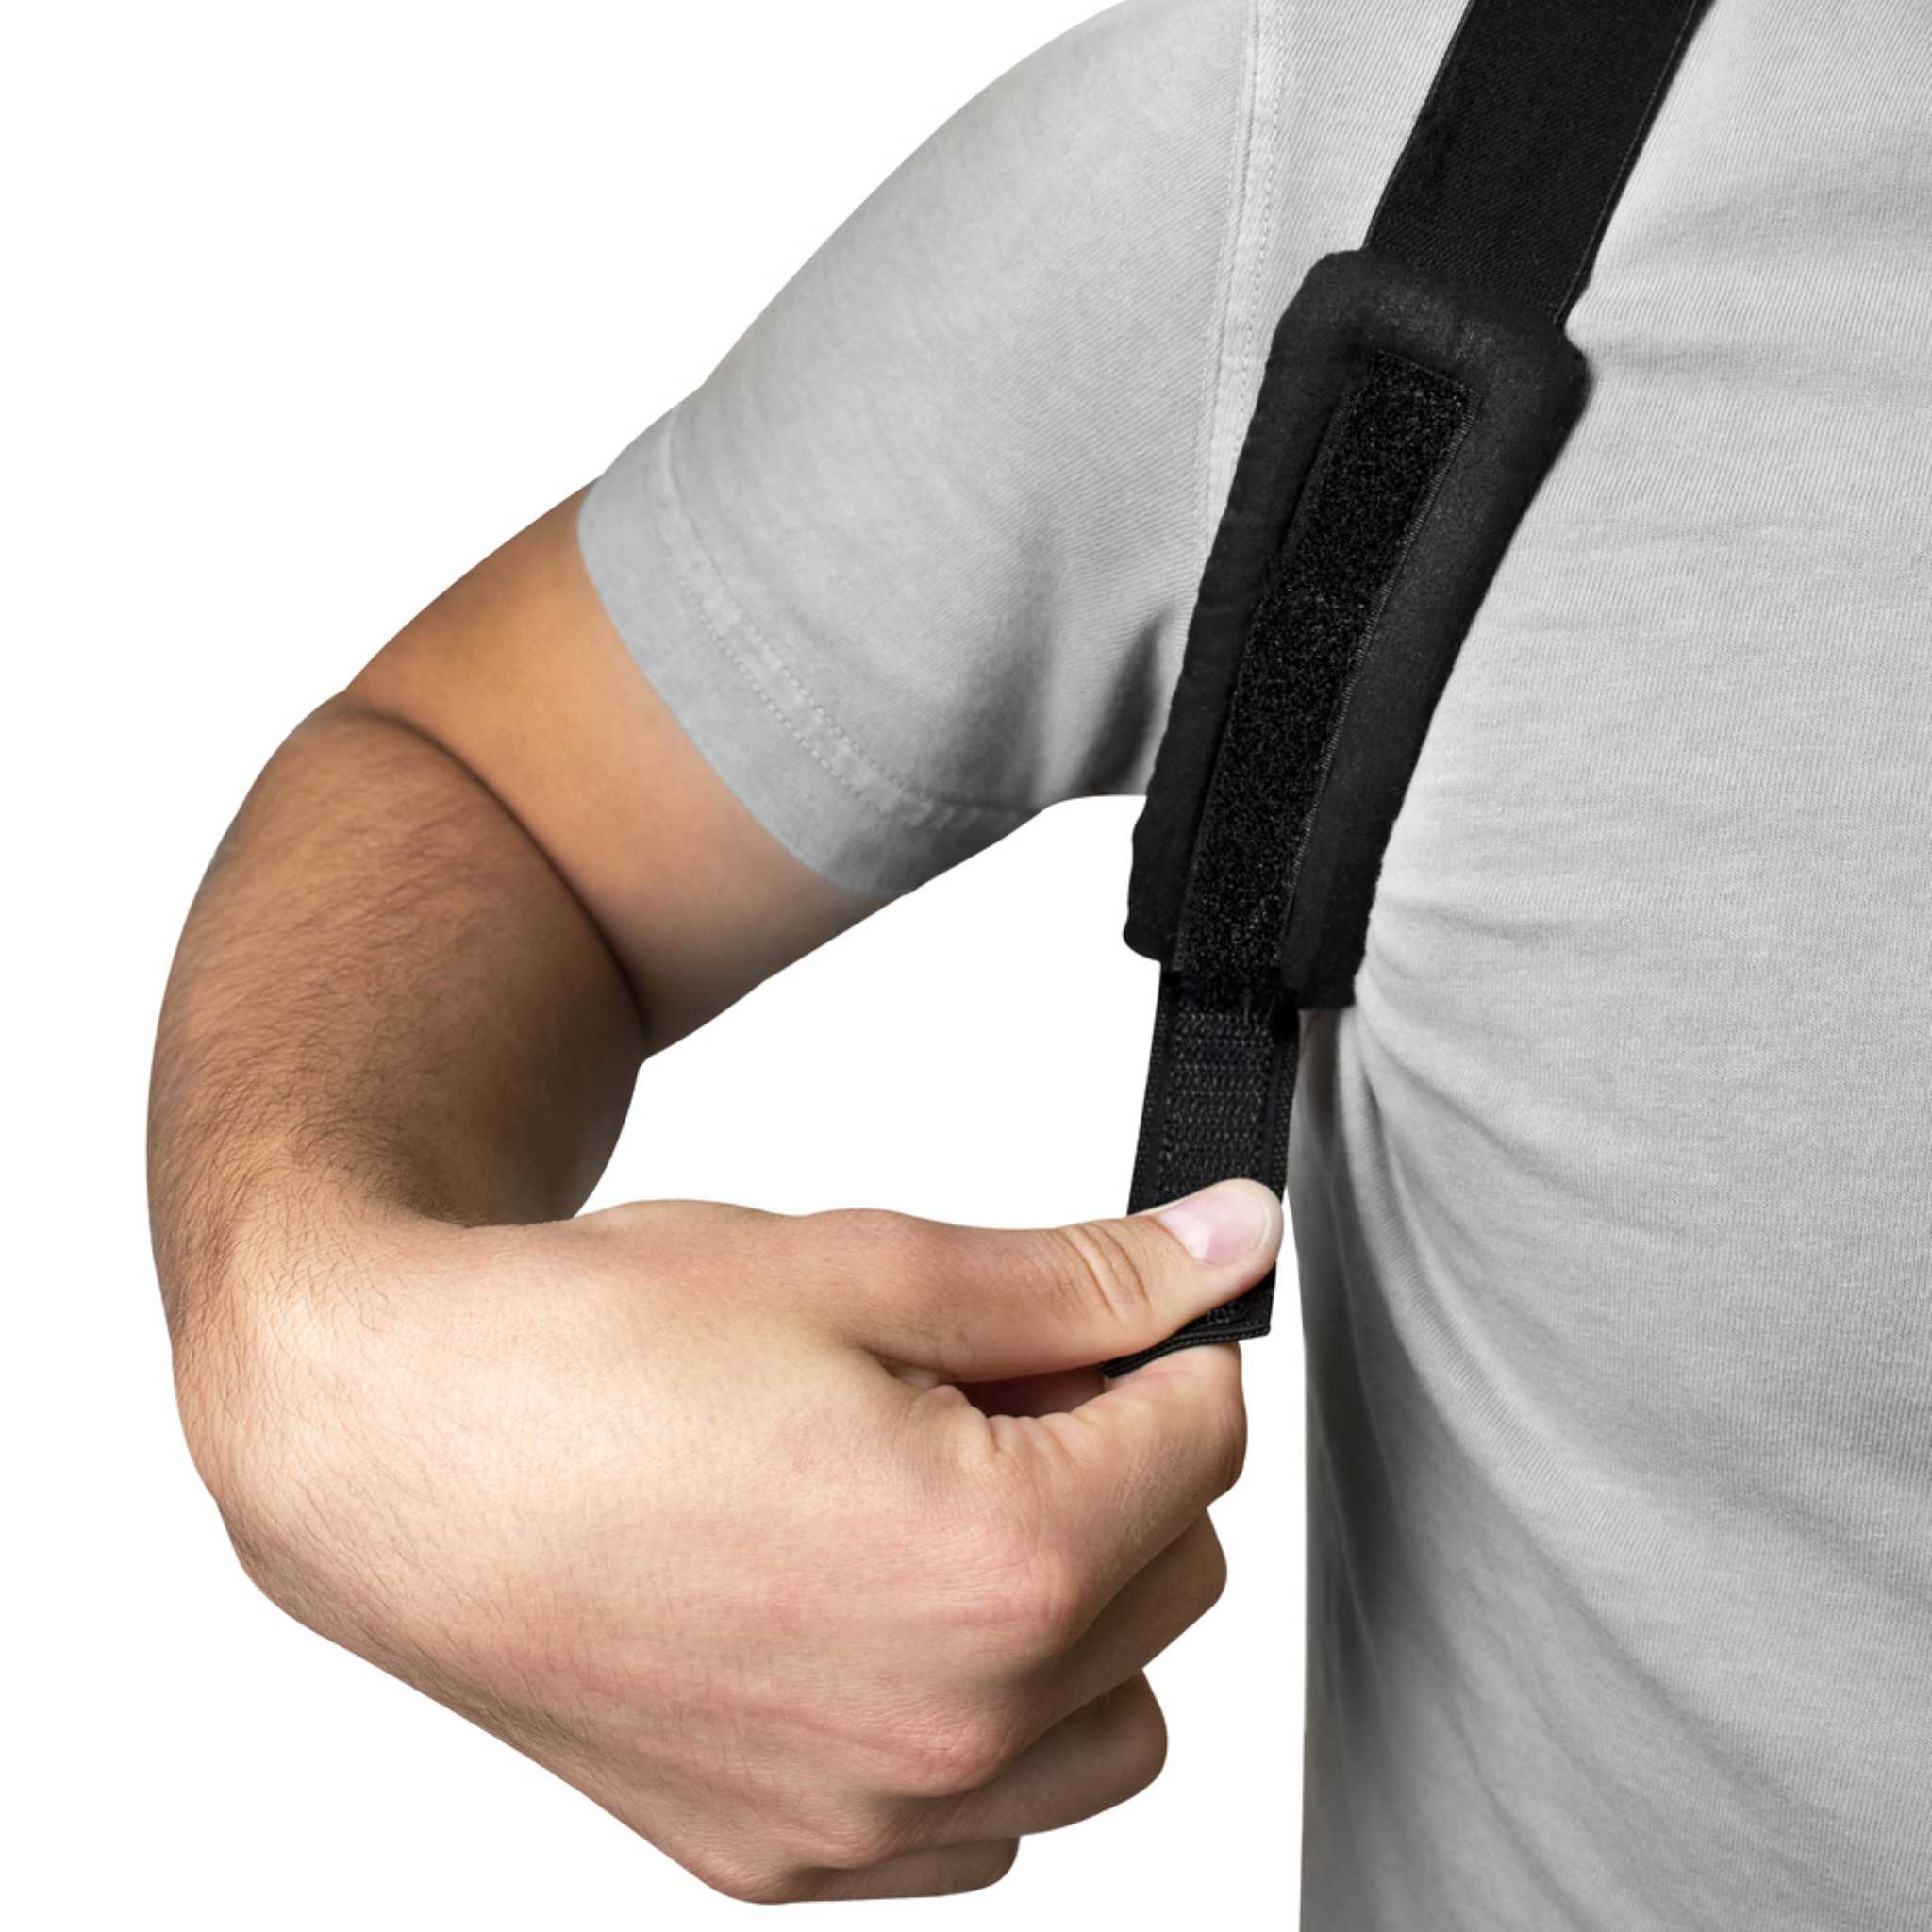 Mueller® Adjustable Posture Support, Unisex, One Size Fits Most - Black